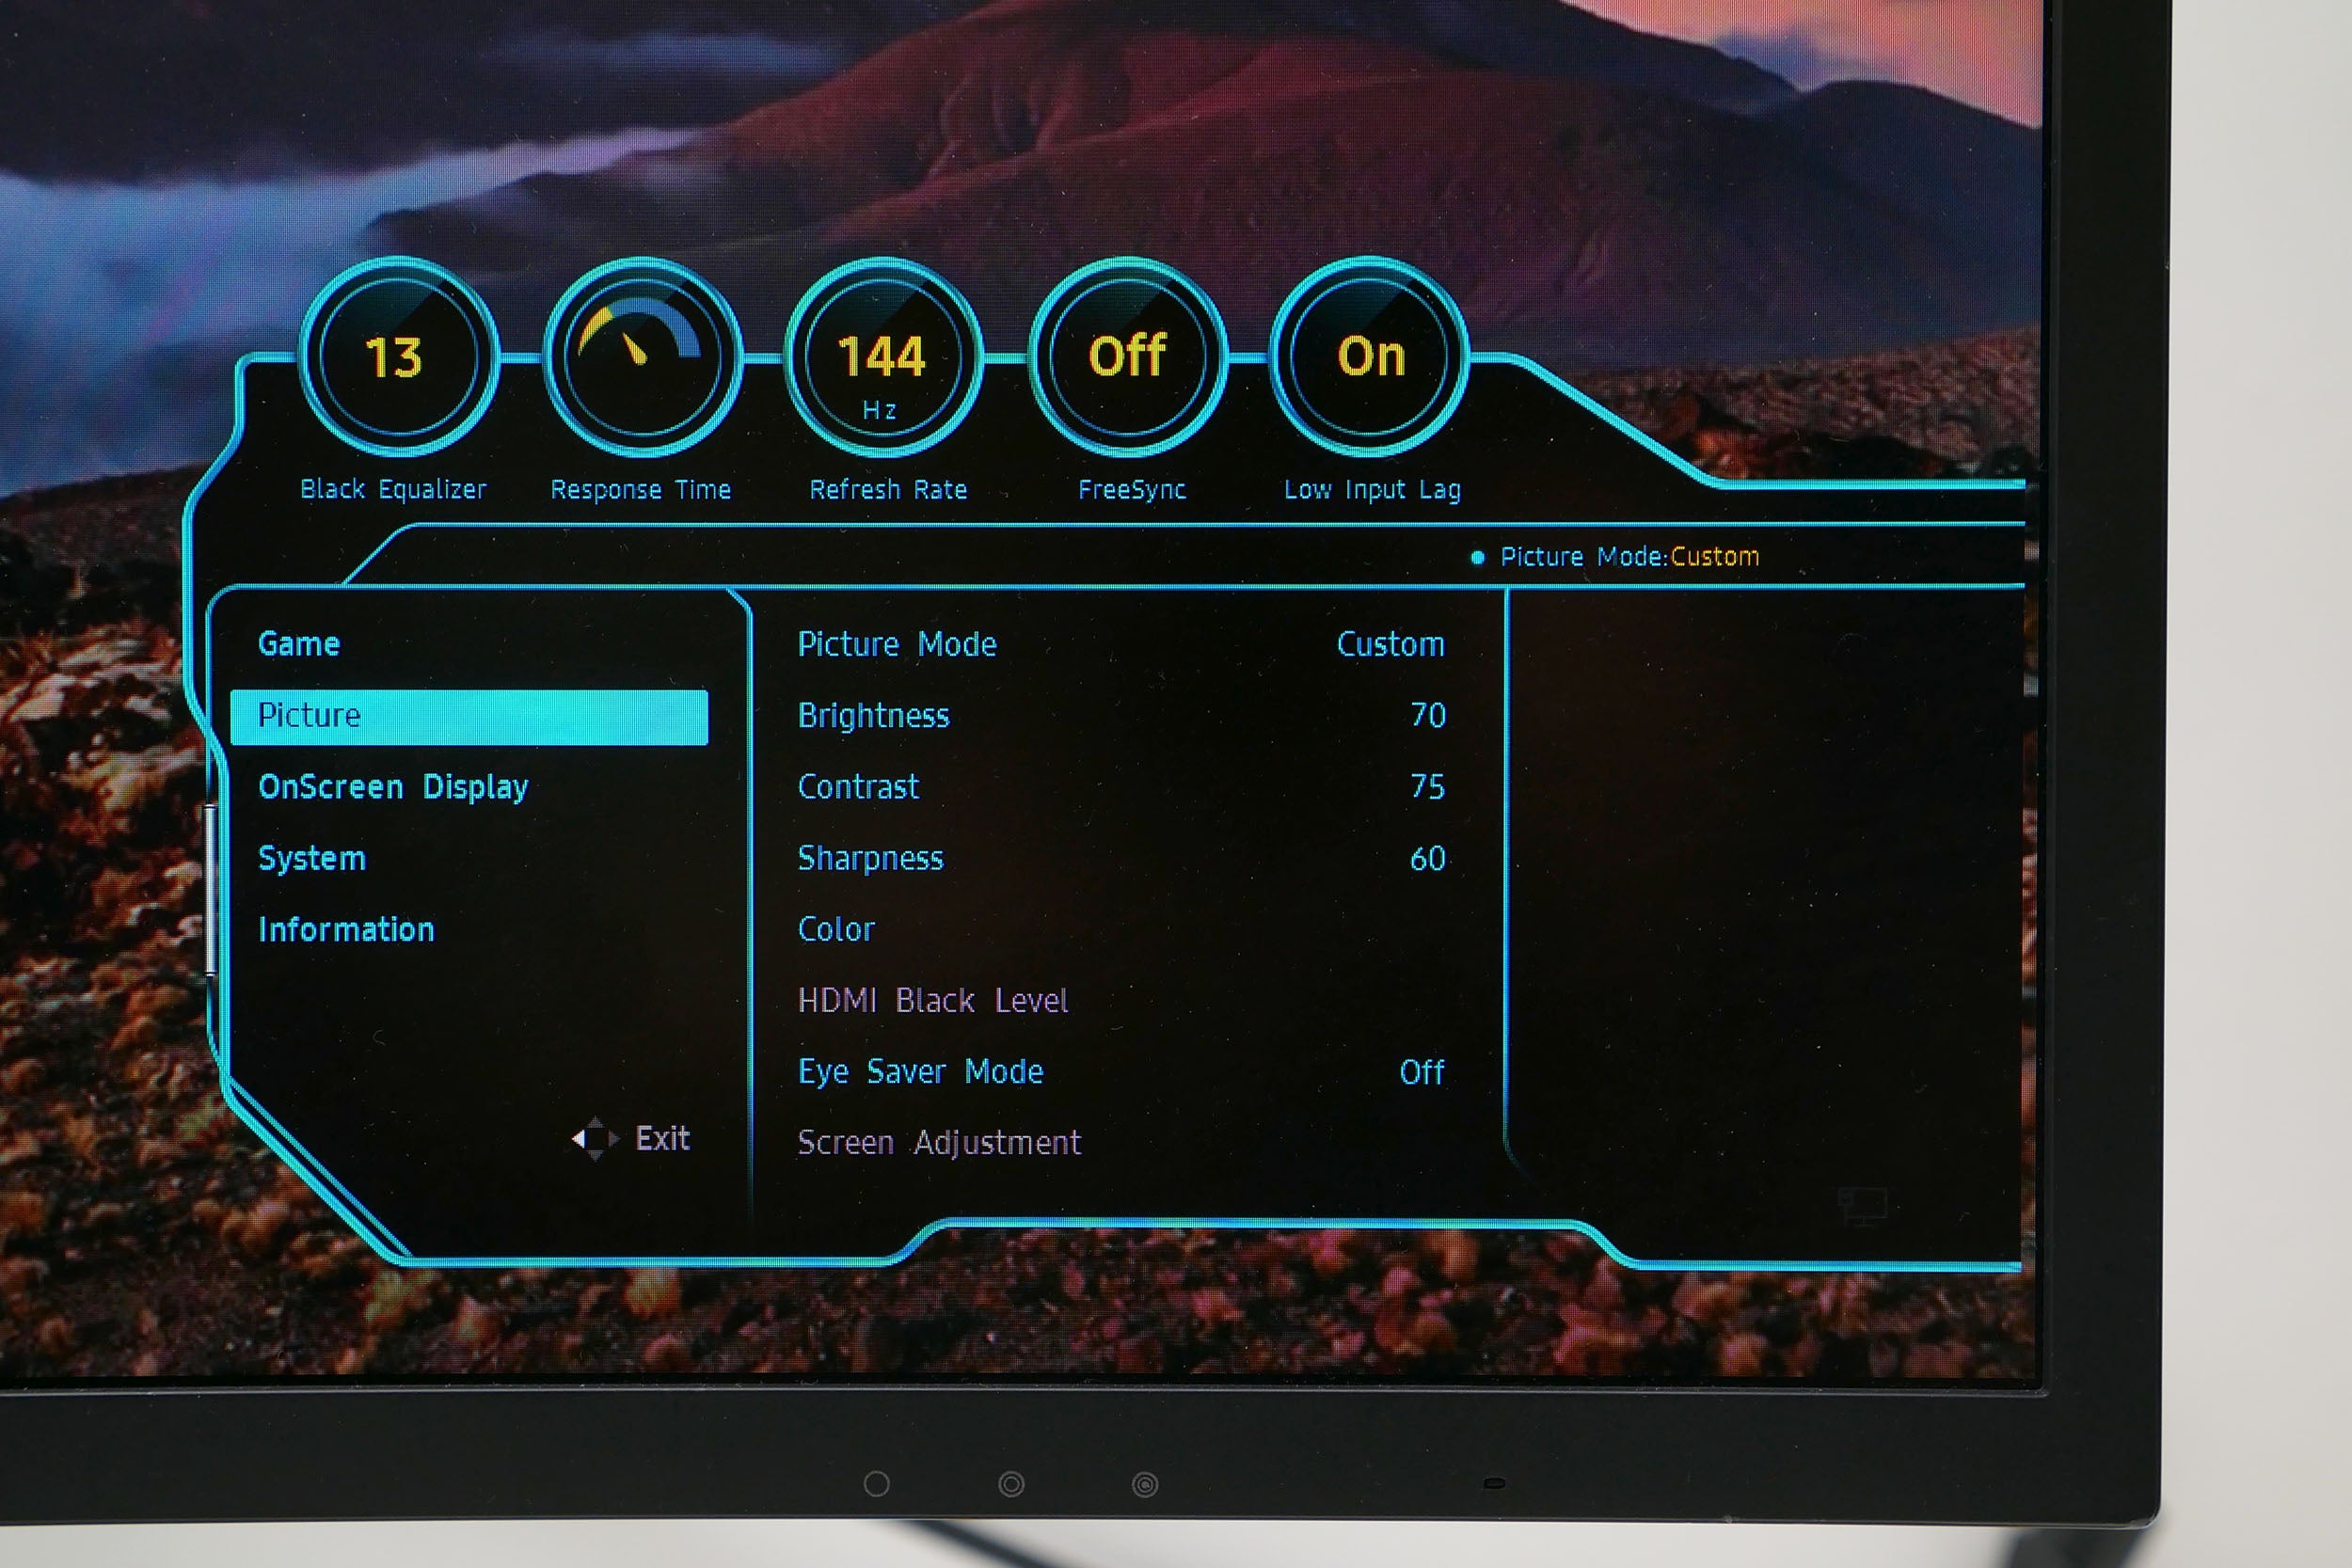 Samsung CHG70 monitor displaying its on-screen menu options.